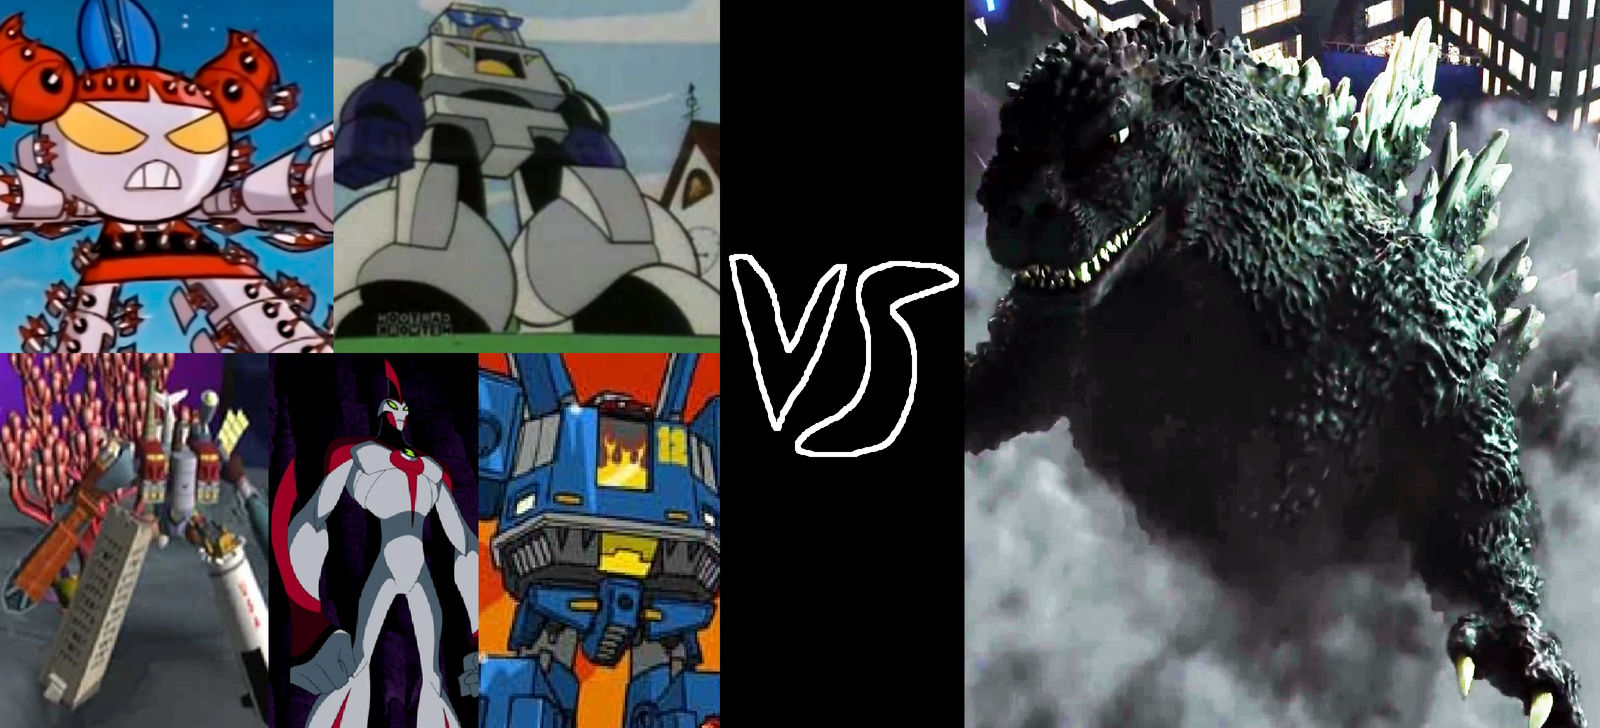 Cartoon Network vs Godzilla by MnstrFrc on DeviantArt